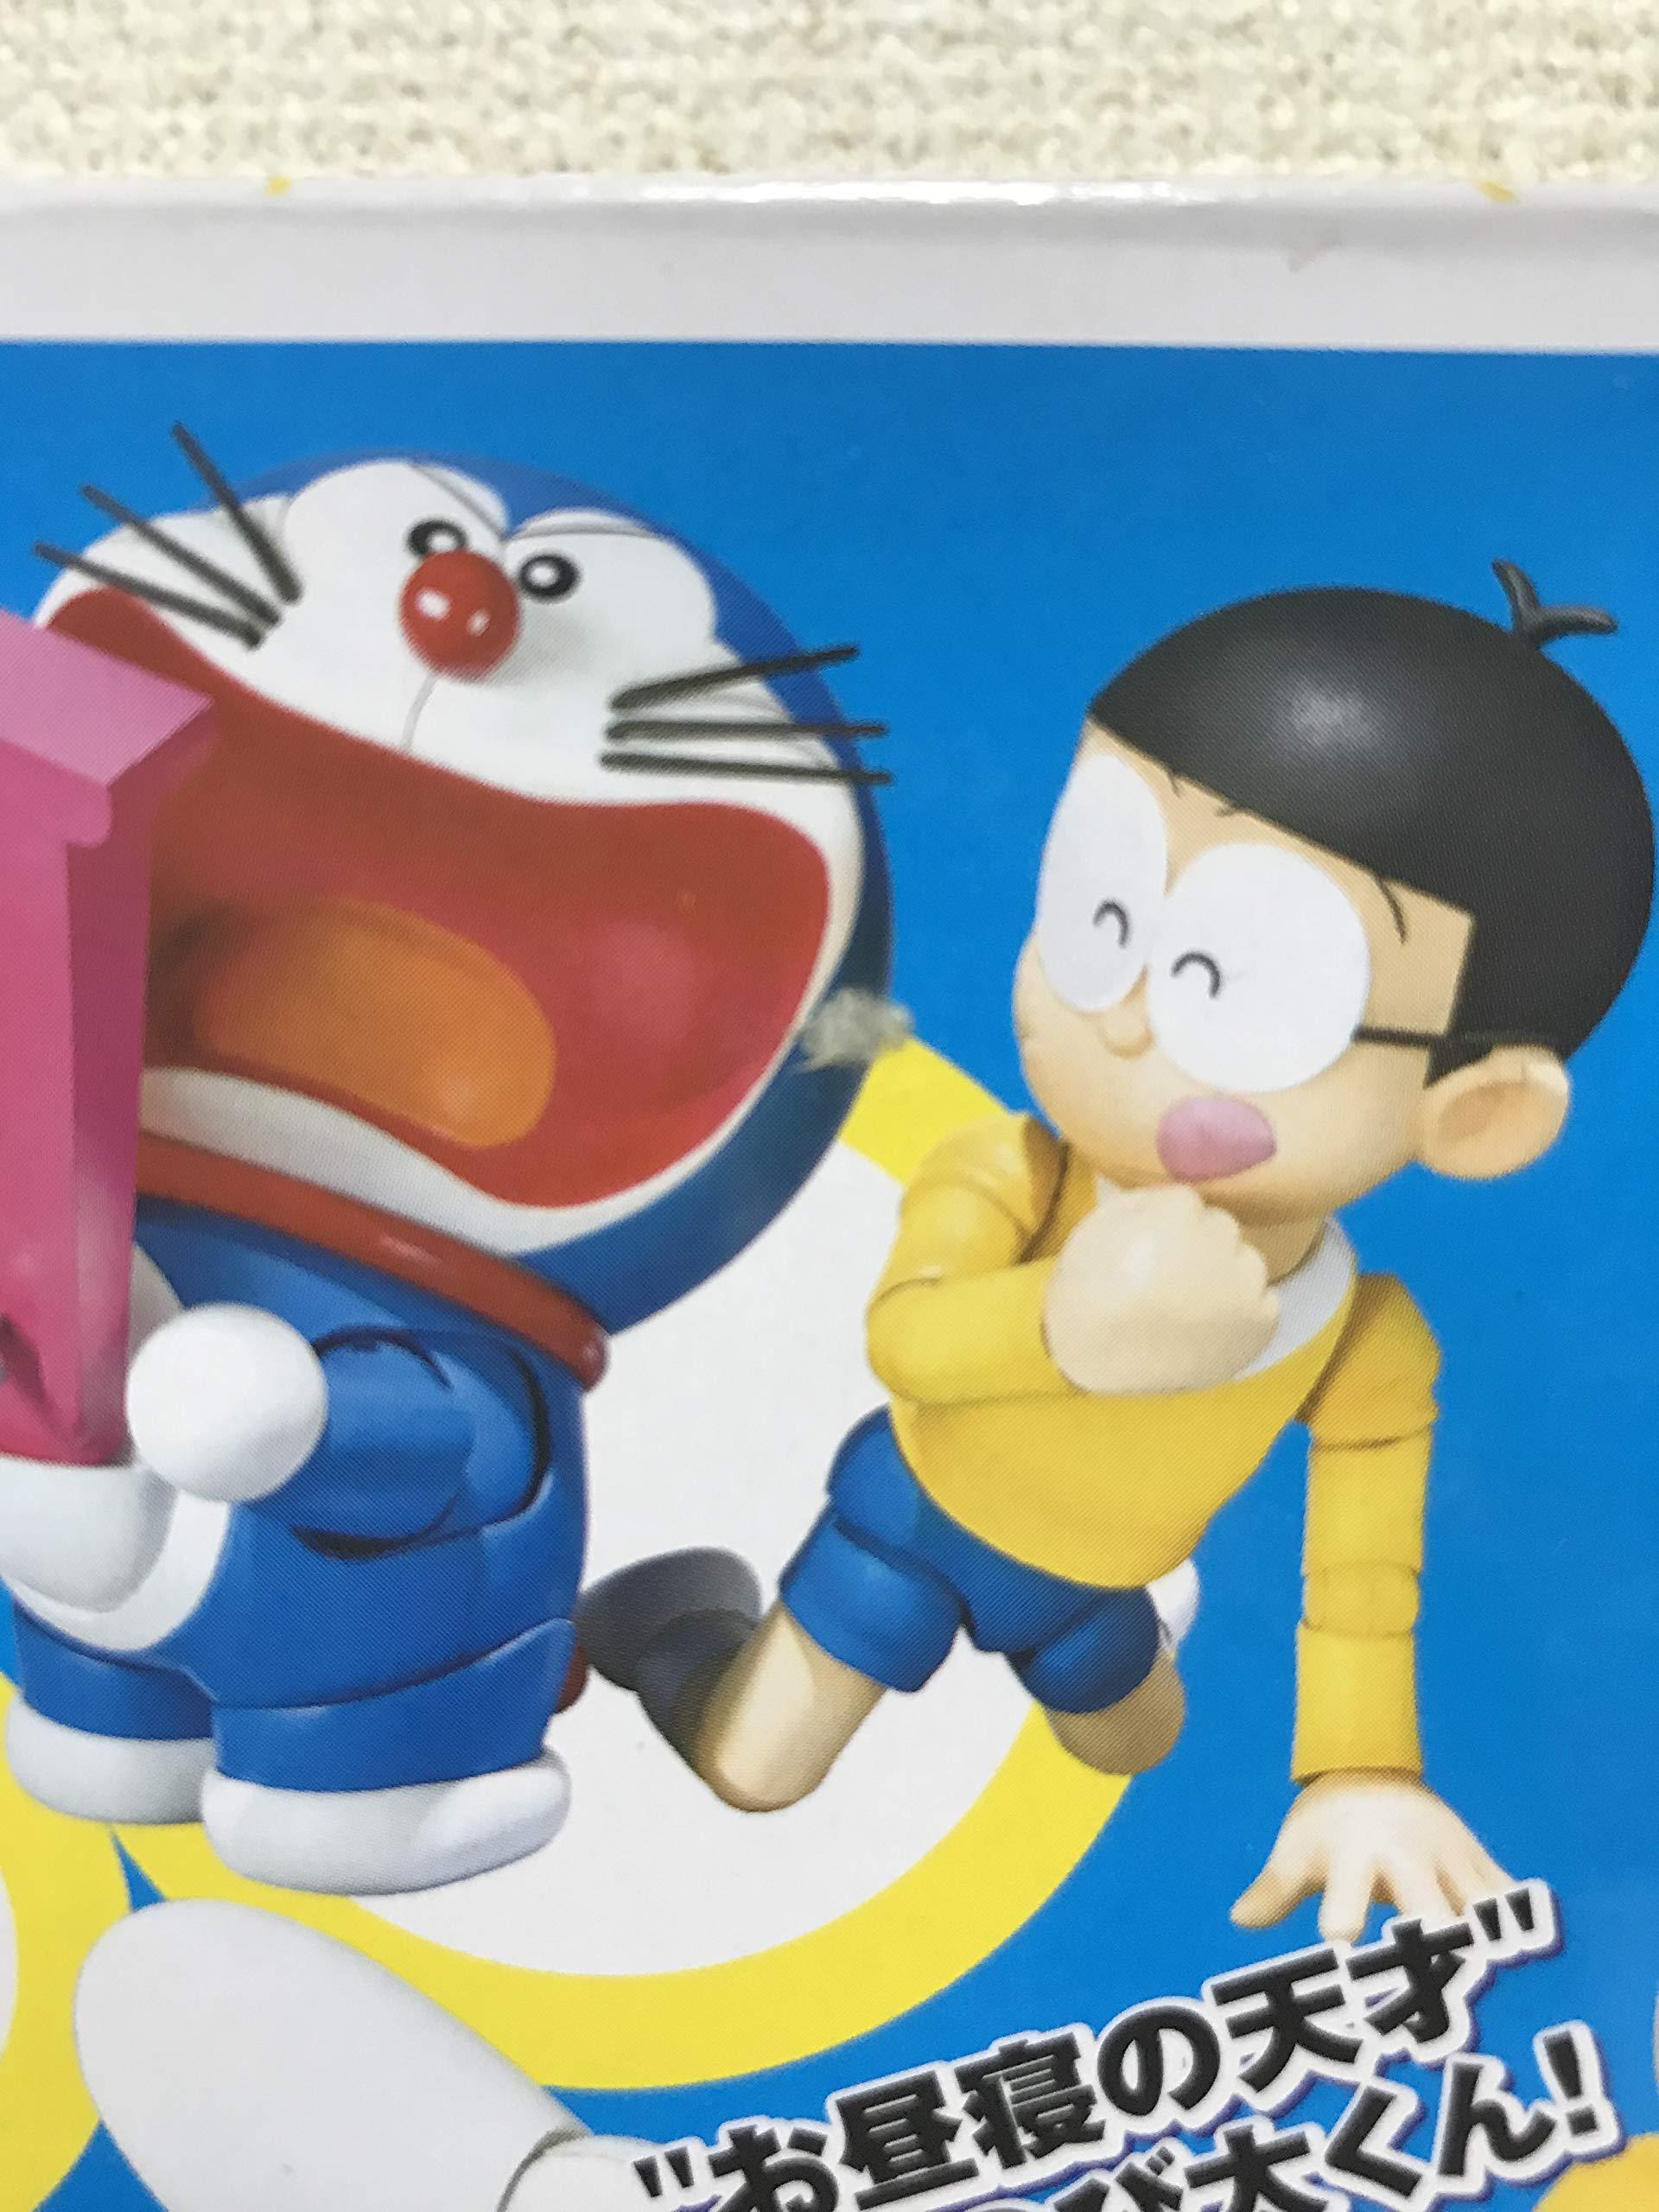 Bandai Toys bandai tamashii nations s.h. figuarts nobi nobita